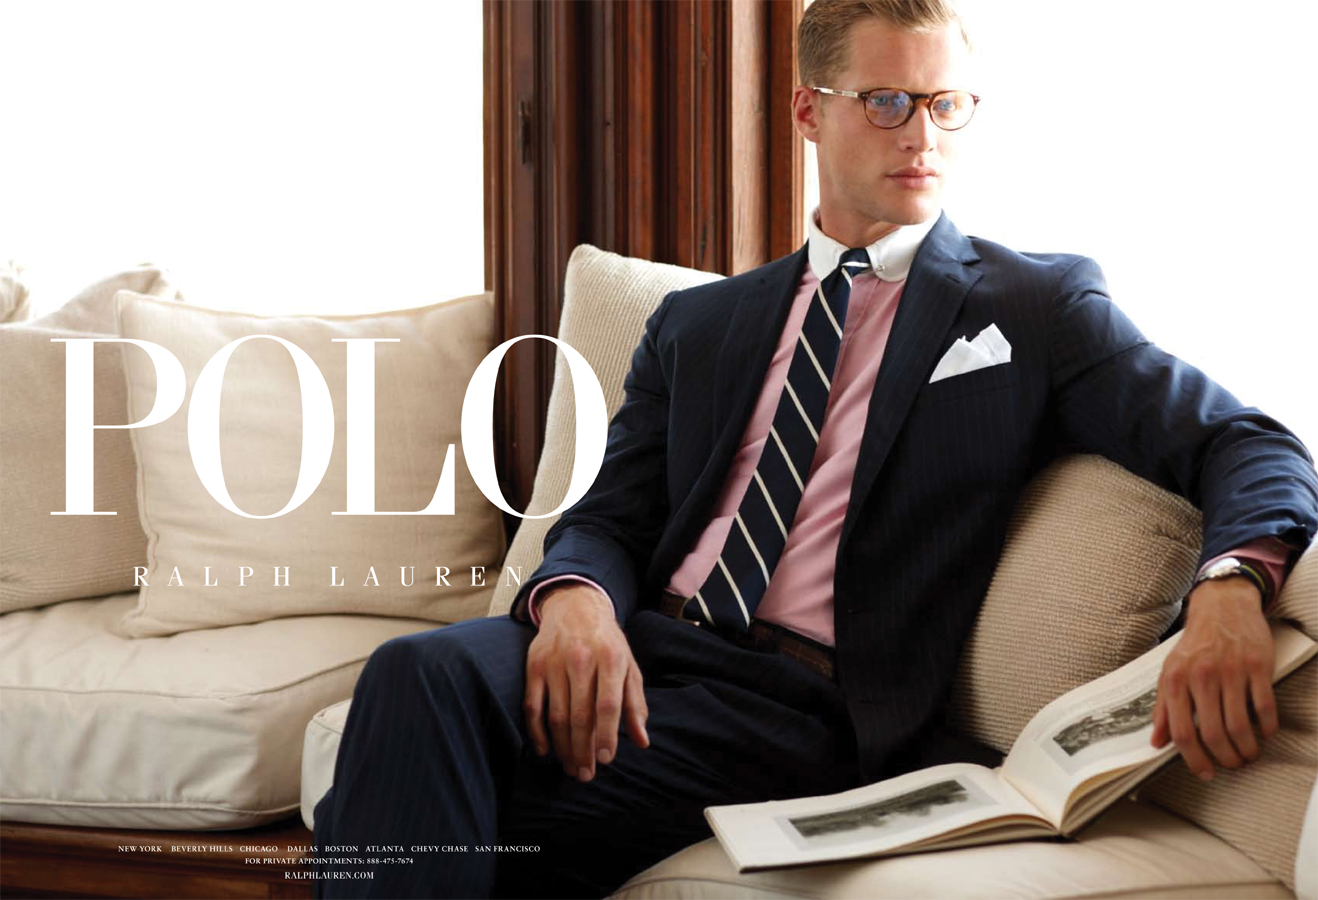 Loyalty360 - Is Polo Ralph Lauren Headed Toward Renewed Brand Loyalty?